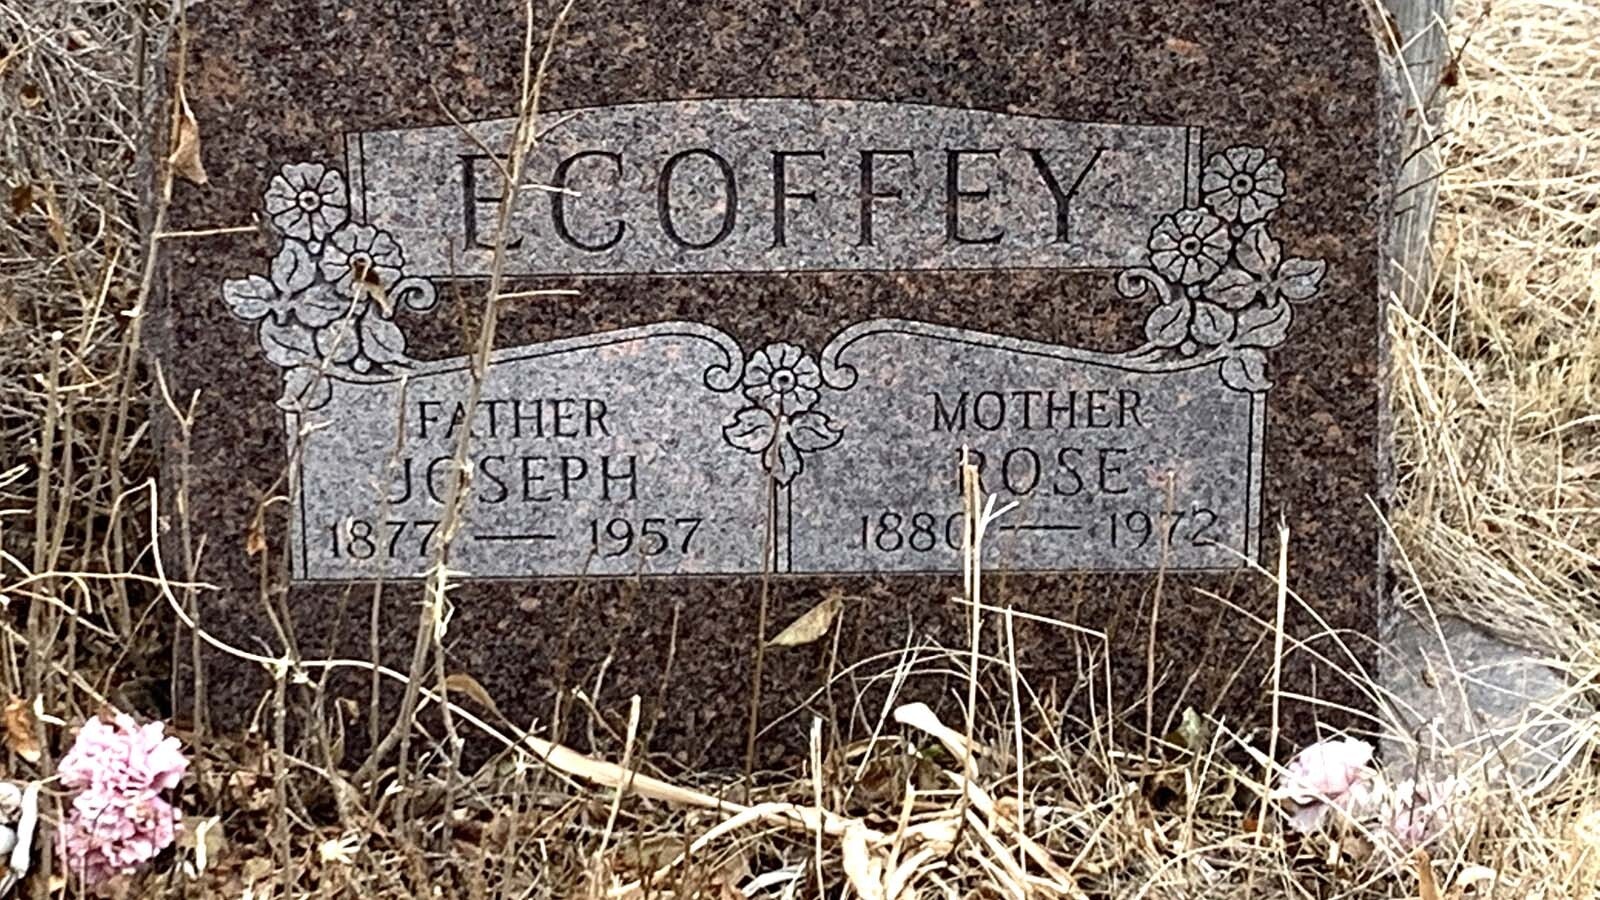 Rose Nelson Ecoffey, aka Princess Blue Water, is buried in Holy Cross Cemetery in Oglala Lakota County, South Dakota.